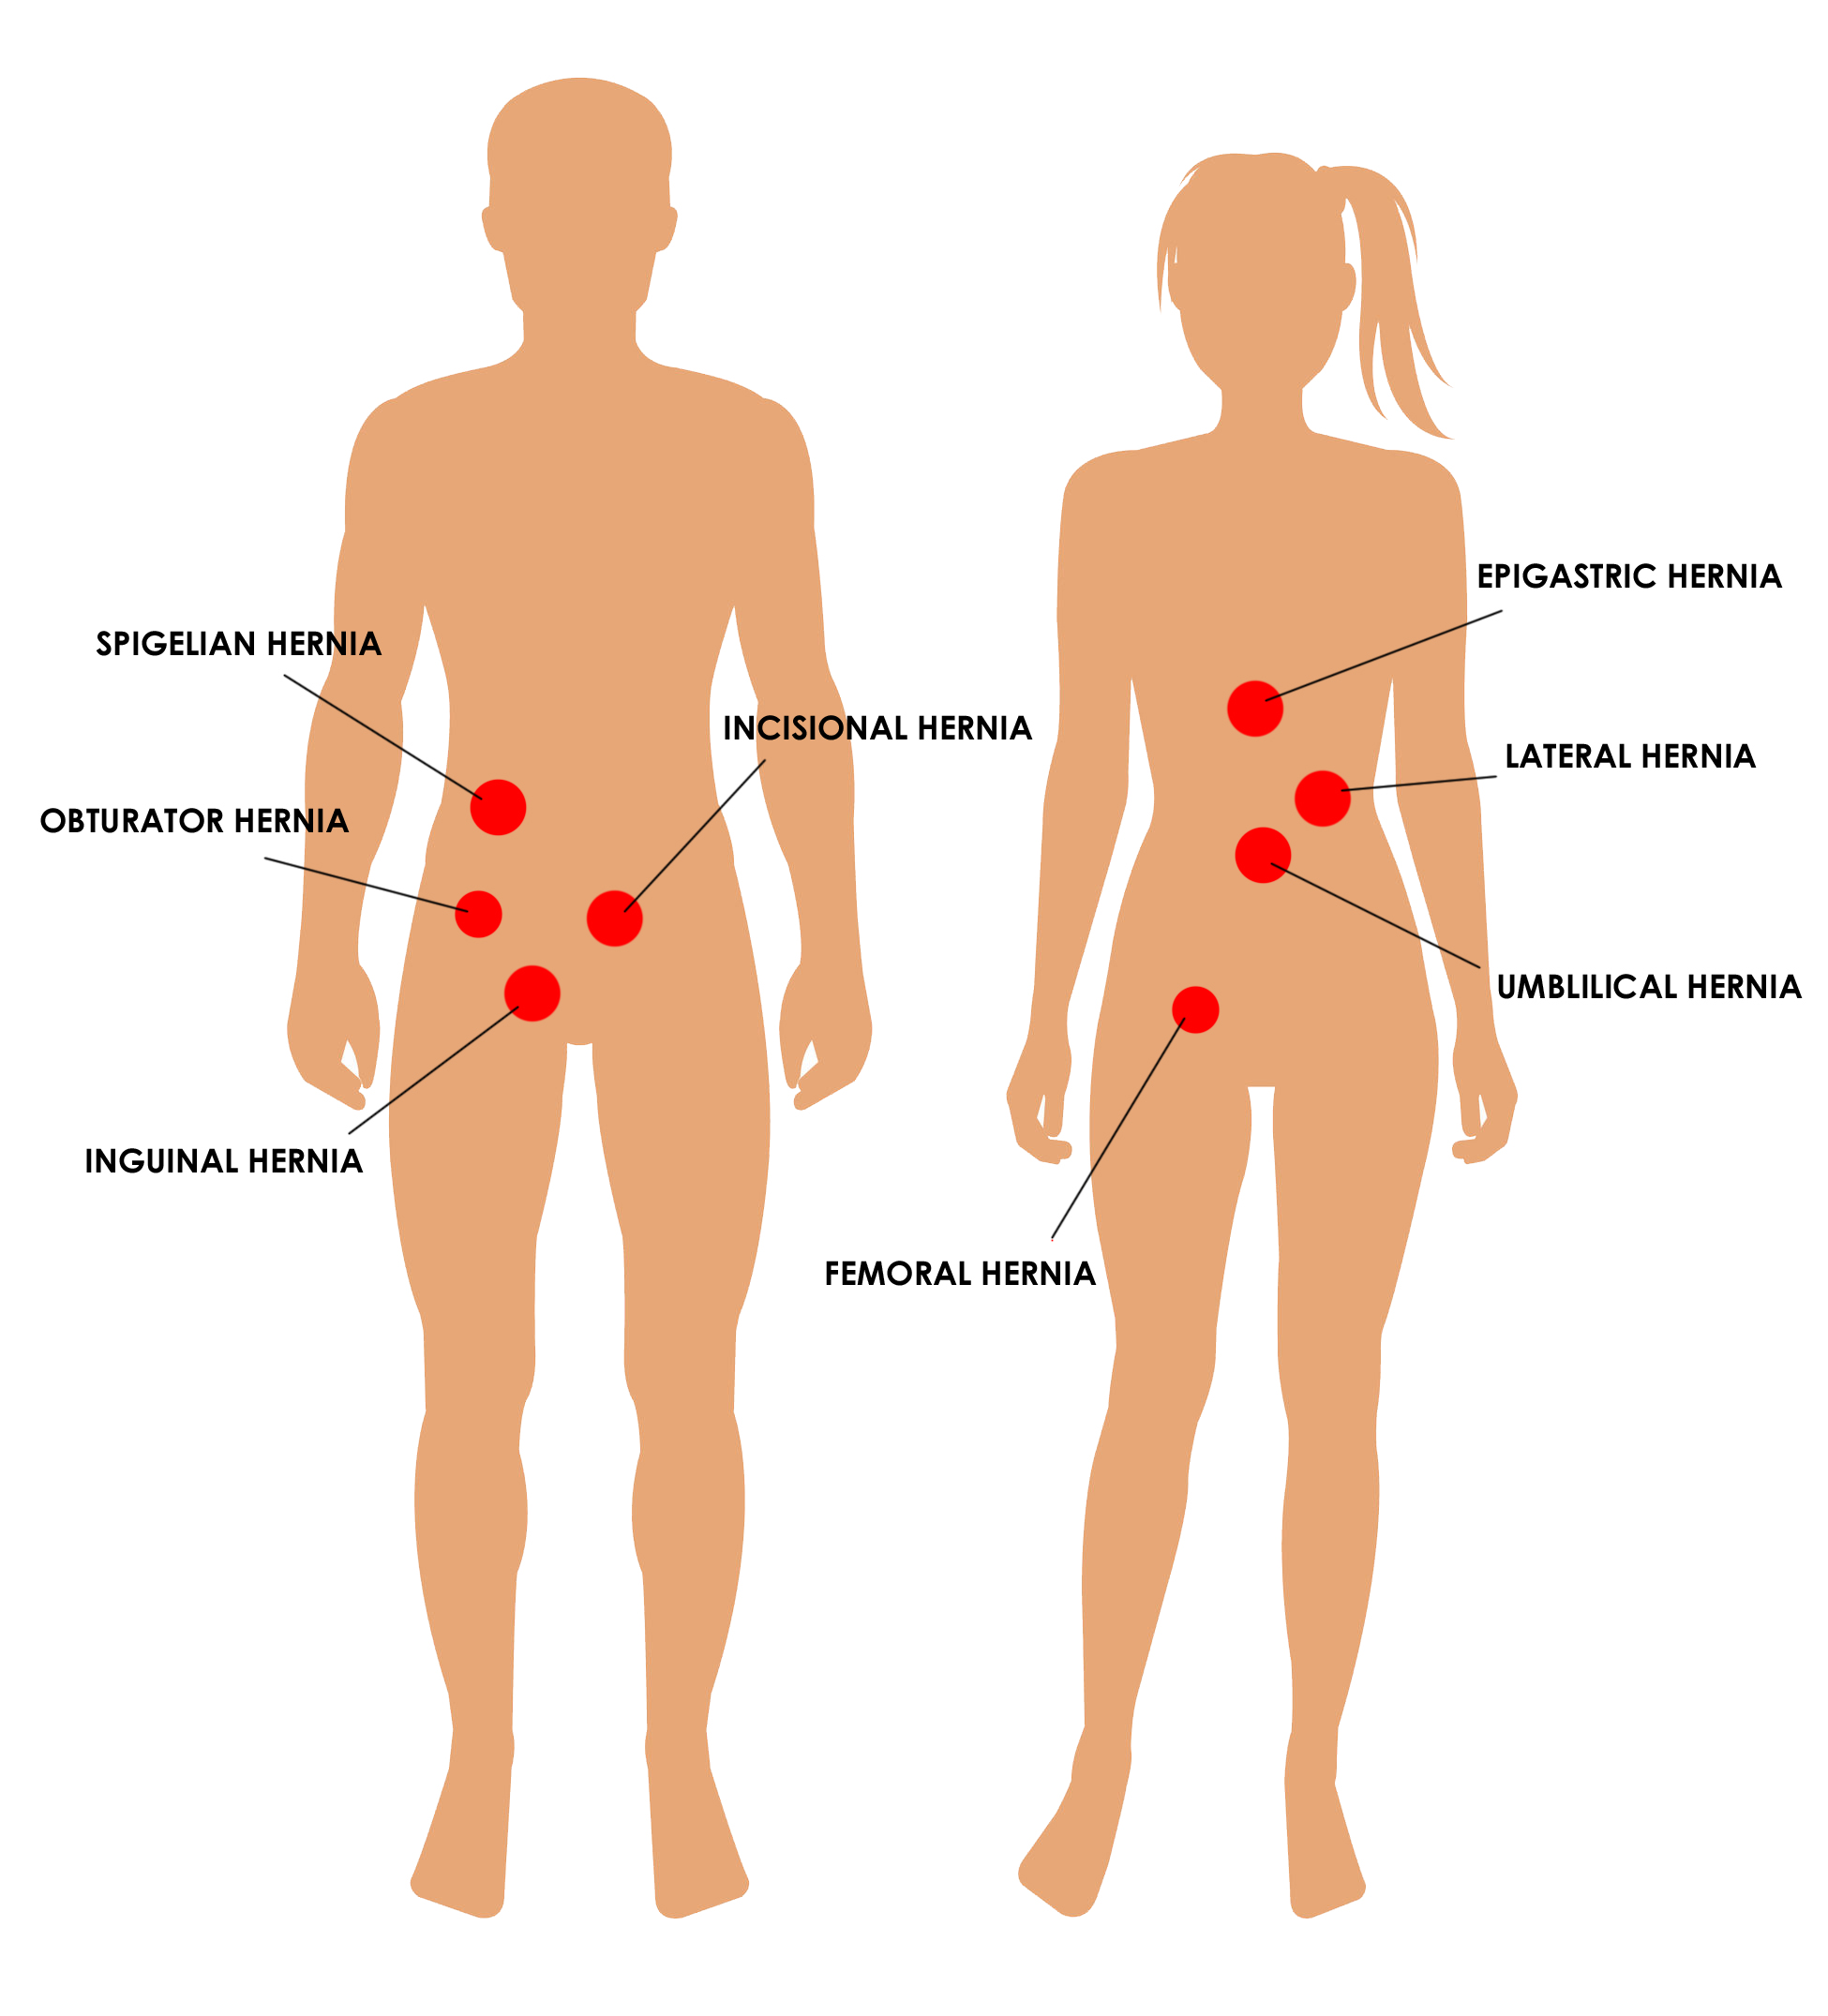 Representation of types of hernia